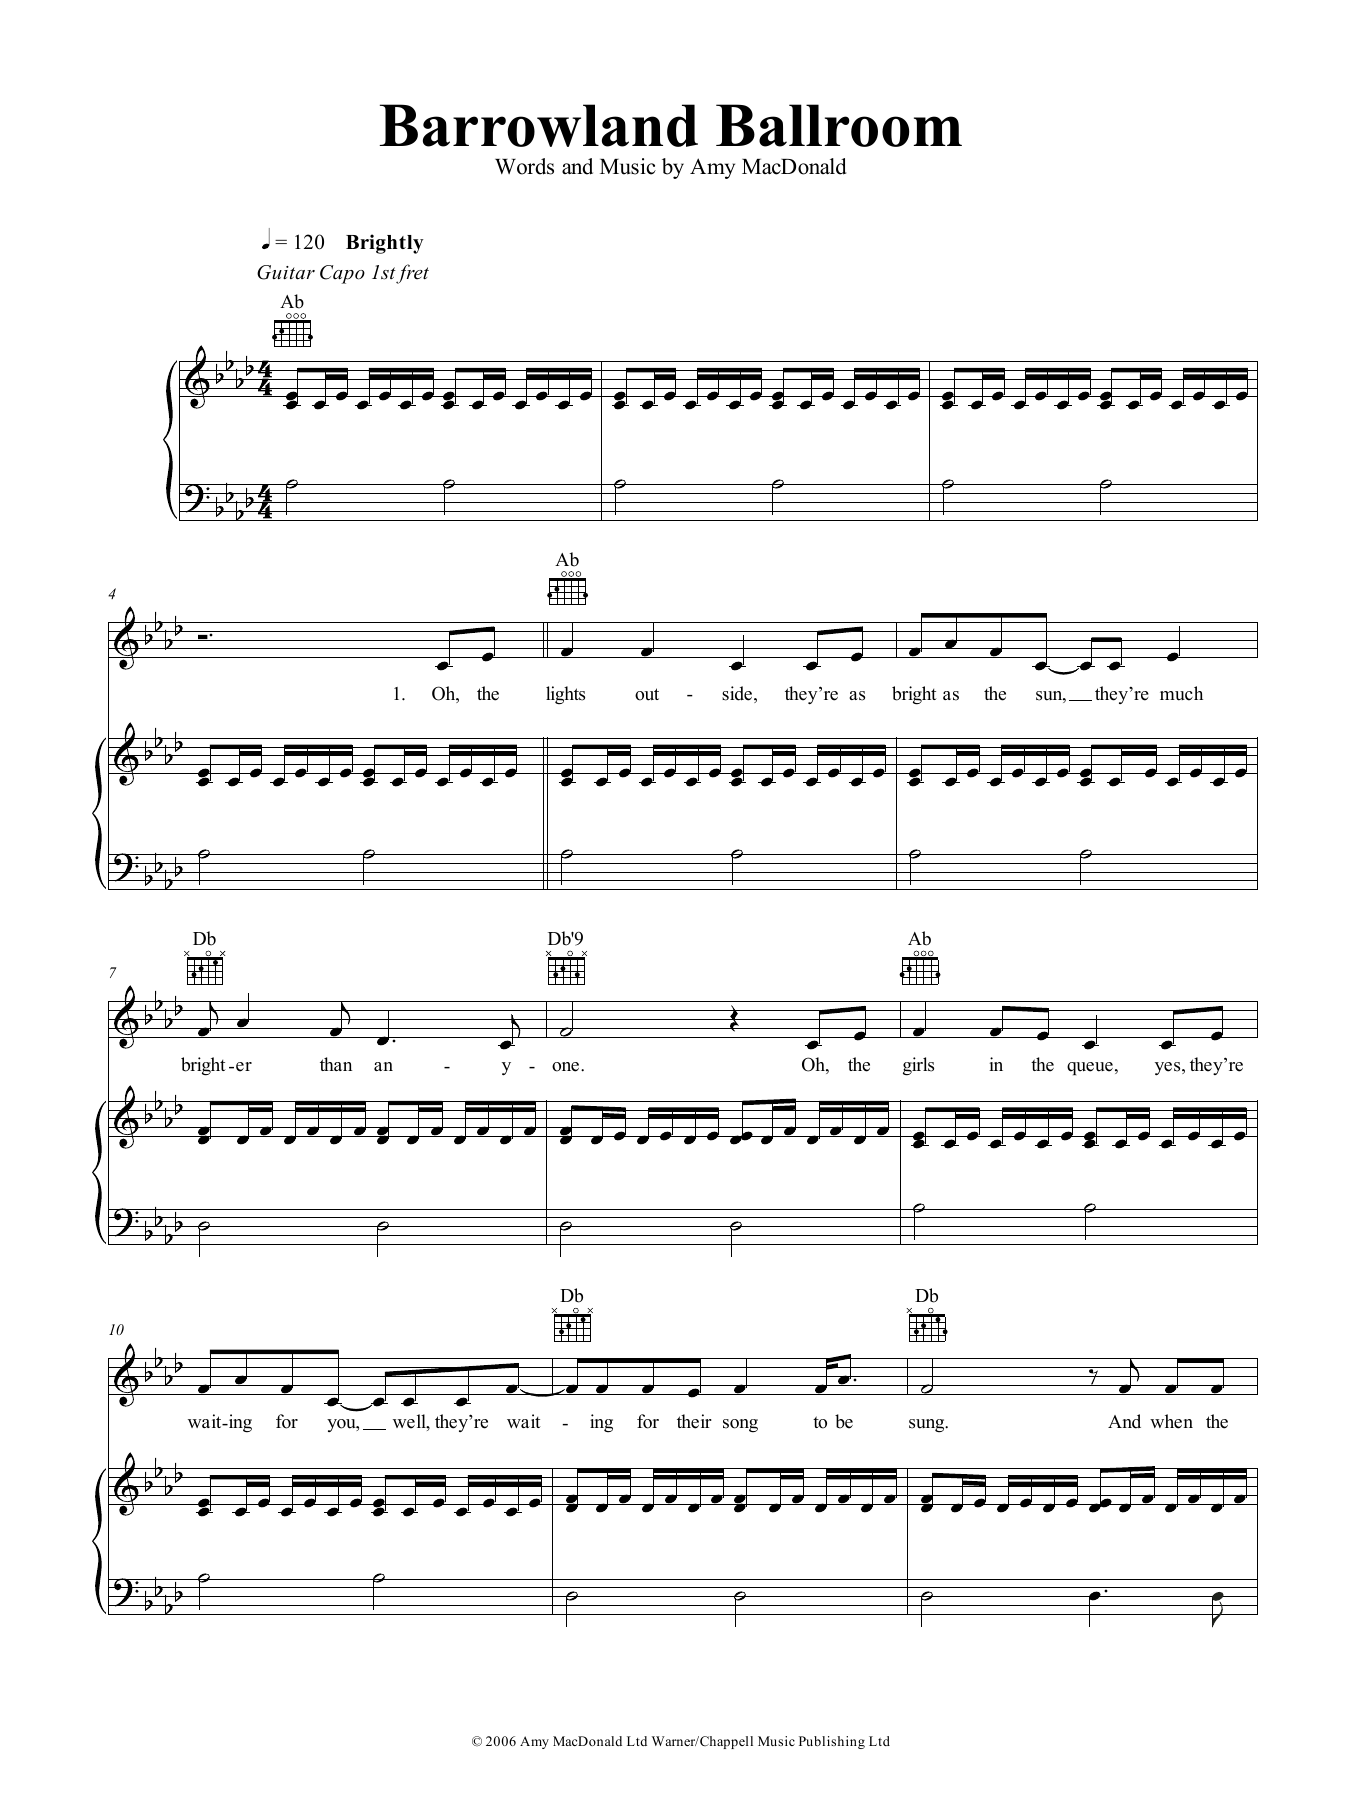 Amy MacDonald Barrowland Ballroom Sheet Music Notes & Chords for Piano, Vocal & Guitar (Right-Hand Melody) - Download or Print PDF